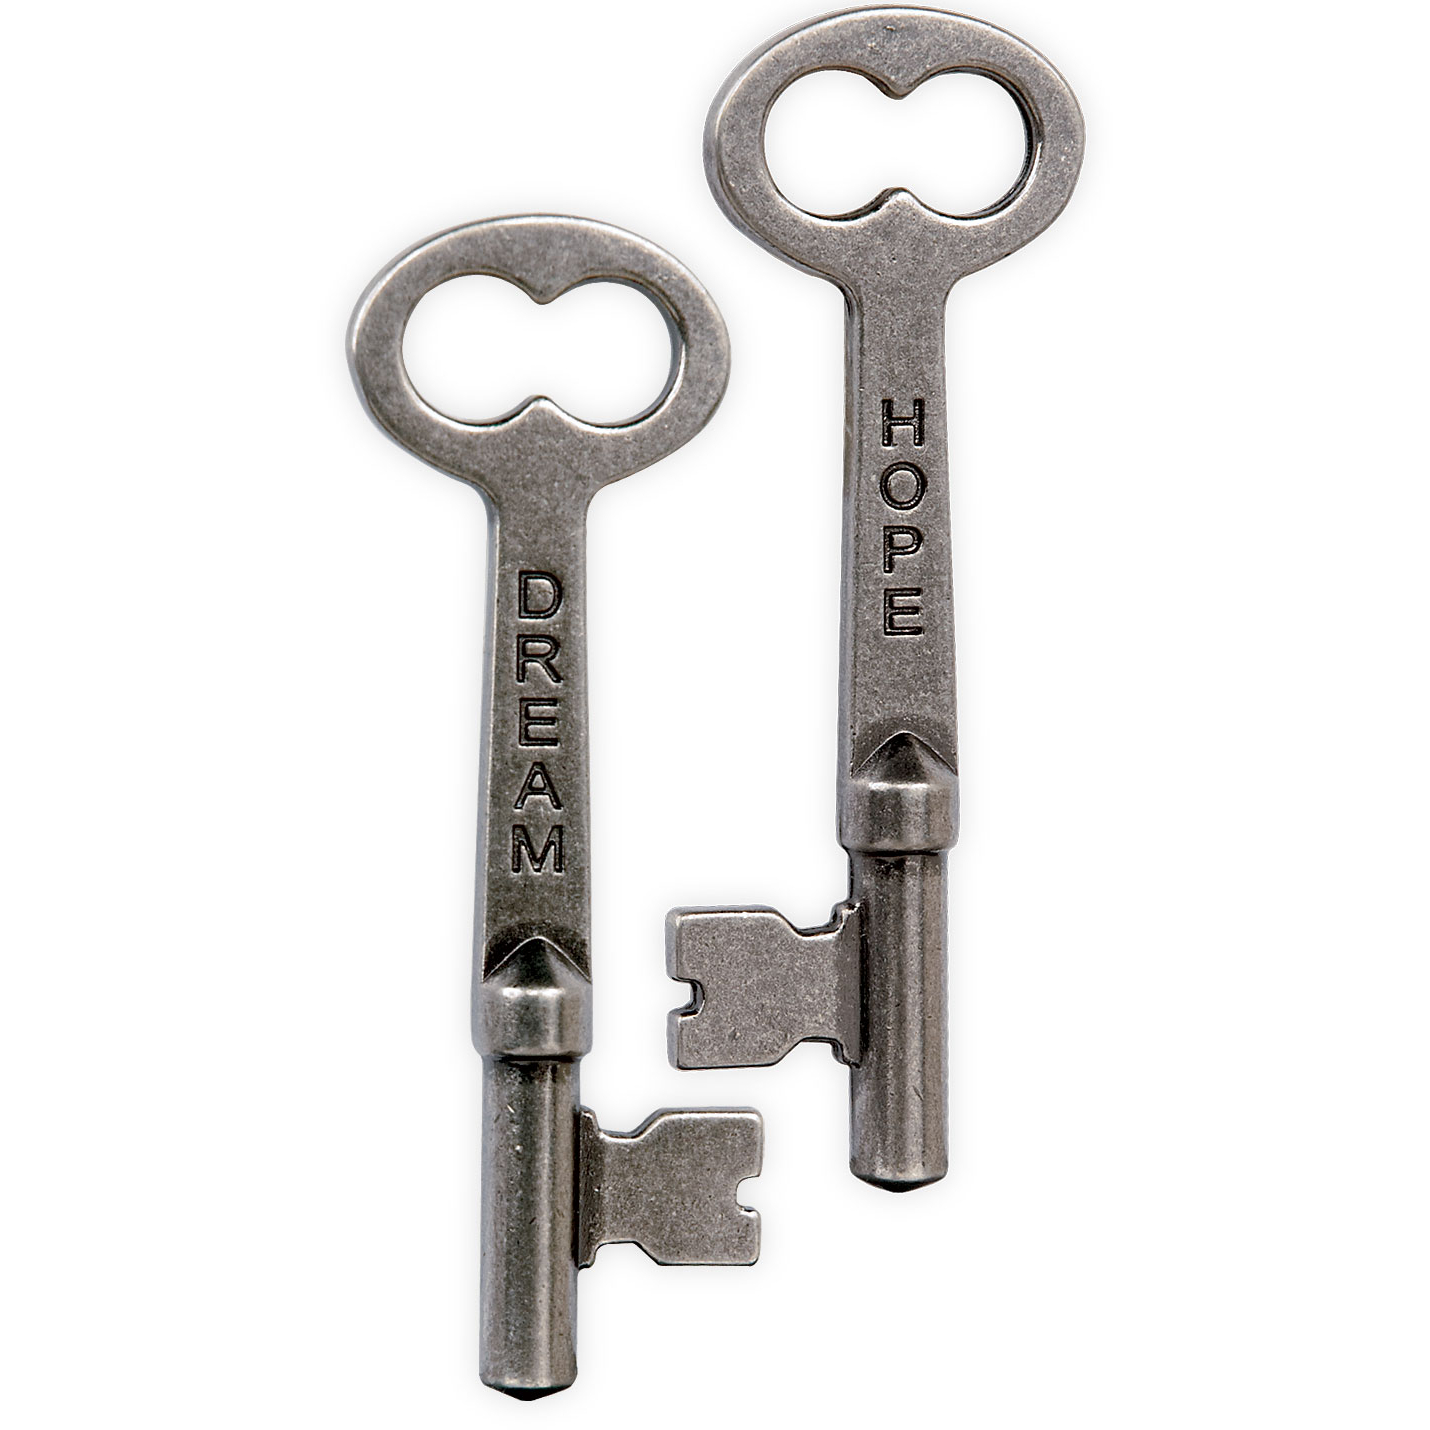 Ts keys. Ключ открывашка. Ключ для TS-ERBUTTON. Key Bottle Opener with Sizes схема.